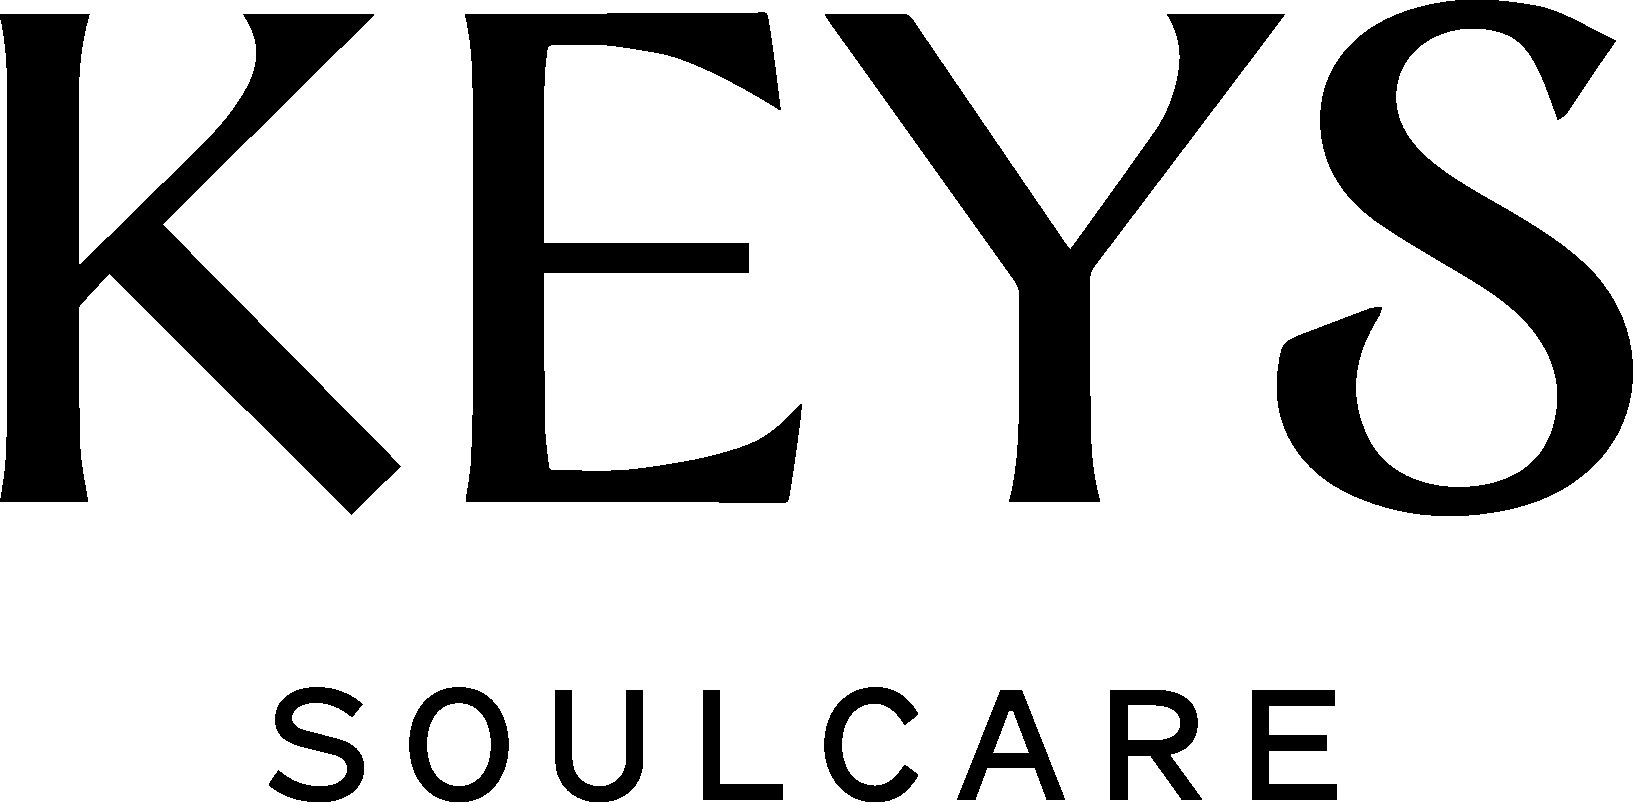 Keys Soulcare_logo